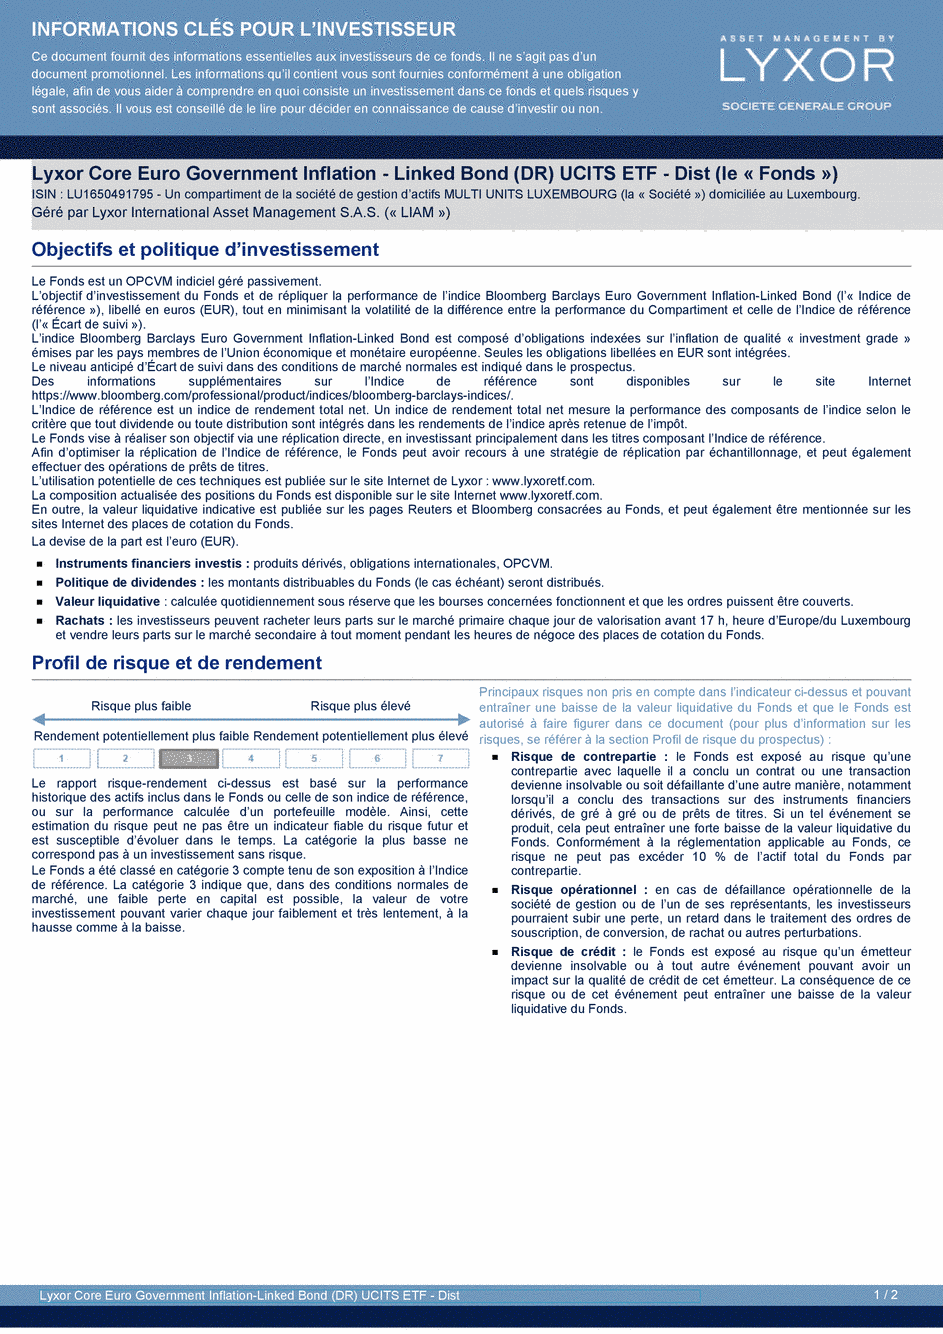 DICI Lyxor Core Euro Government Inflation-Linked Bond (DR) UCITS ETF - Dist - 24/02/2021 - Français